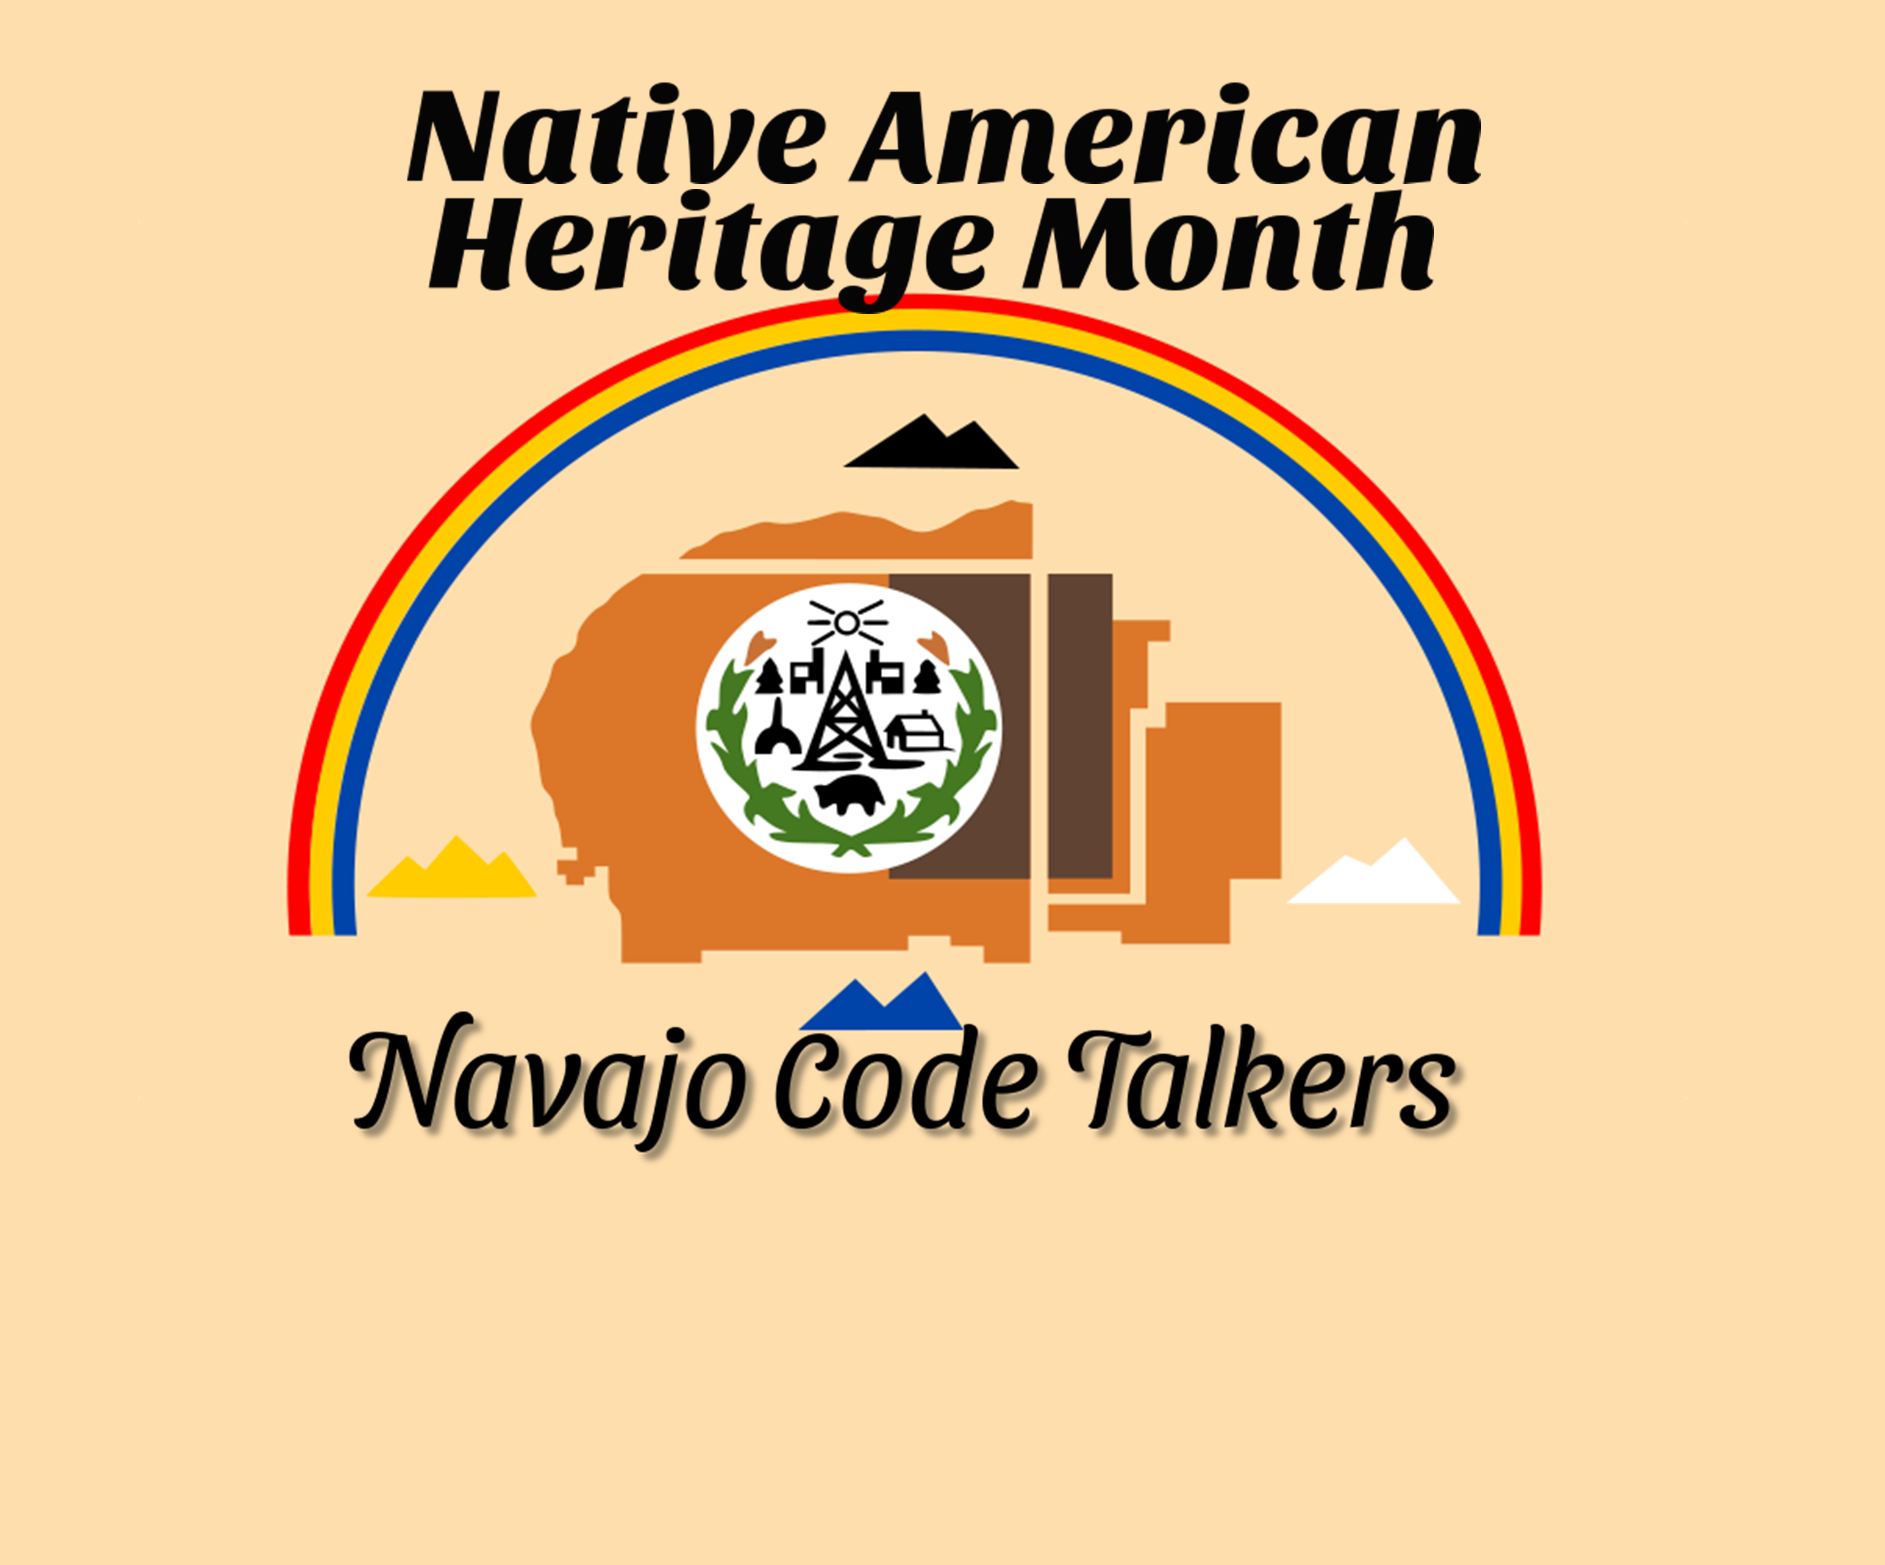 Native American Heritage Month: Navajo Code Talkers